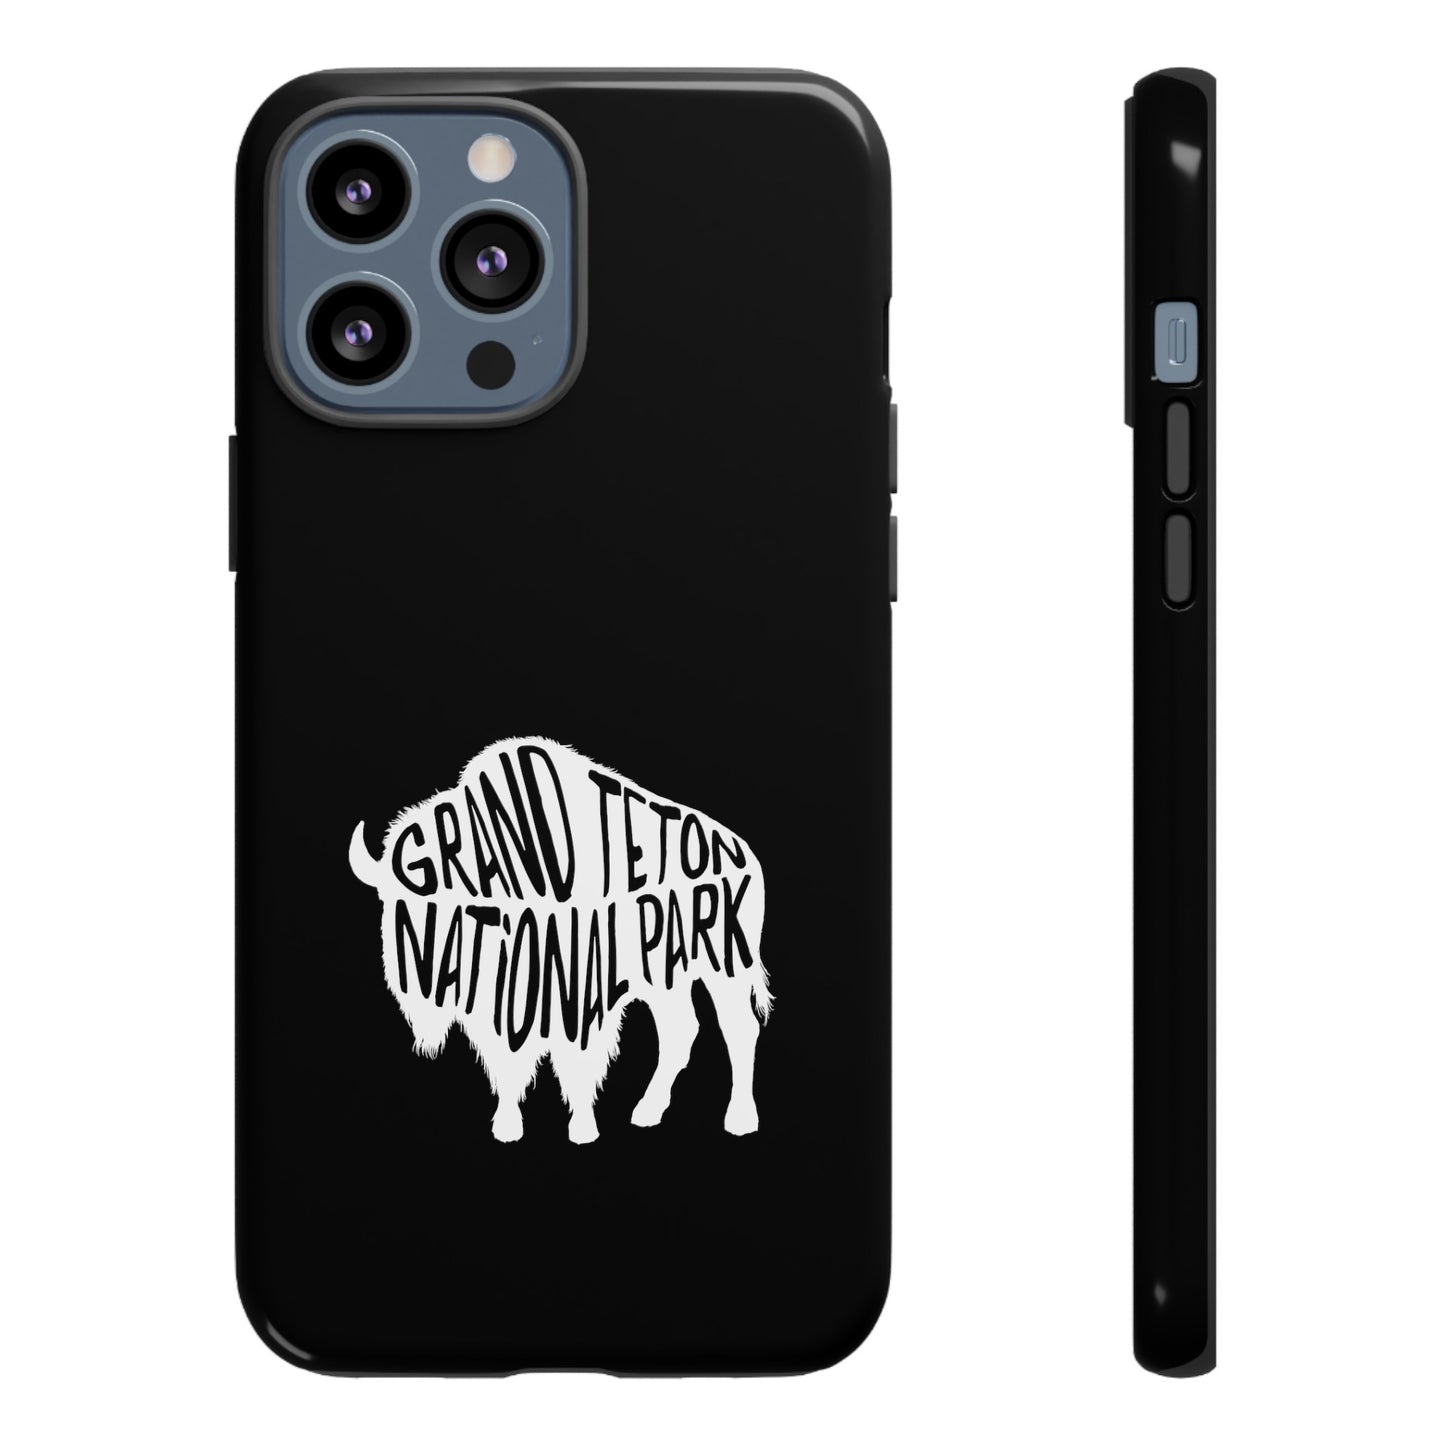 Grand Teton National Park Phone Case - Bison Design